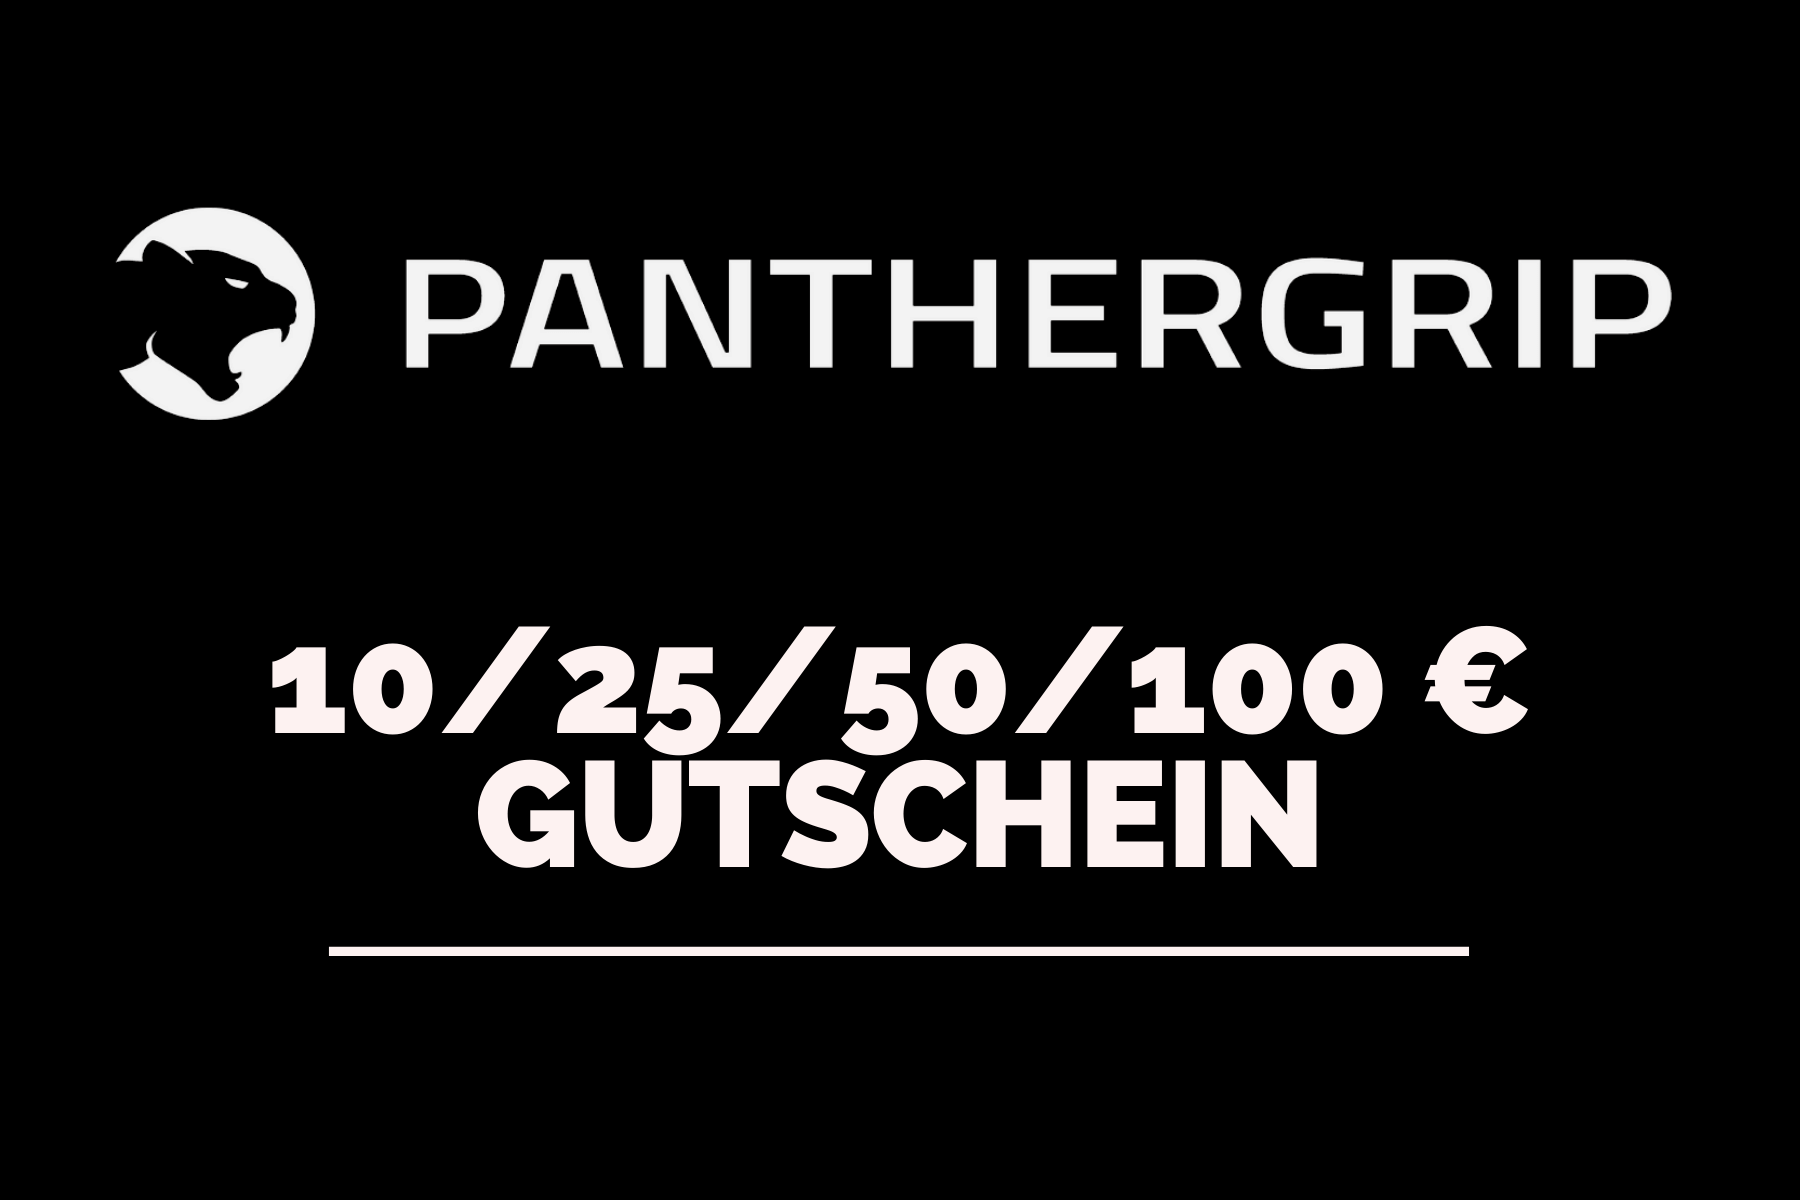 PANTHERGRIP Gift Certificate